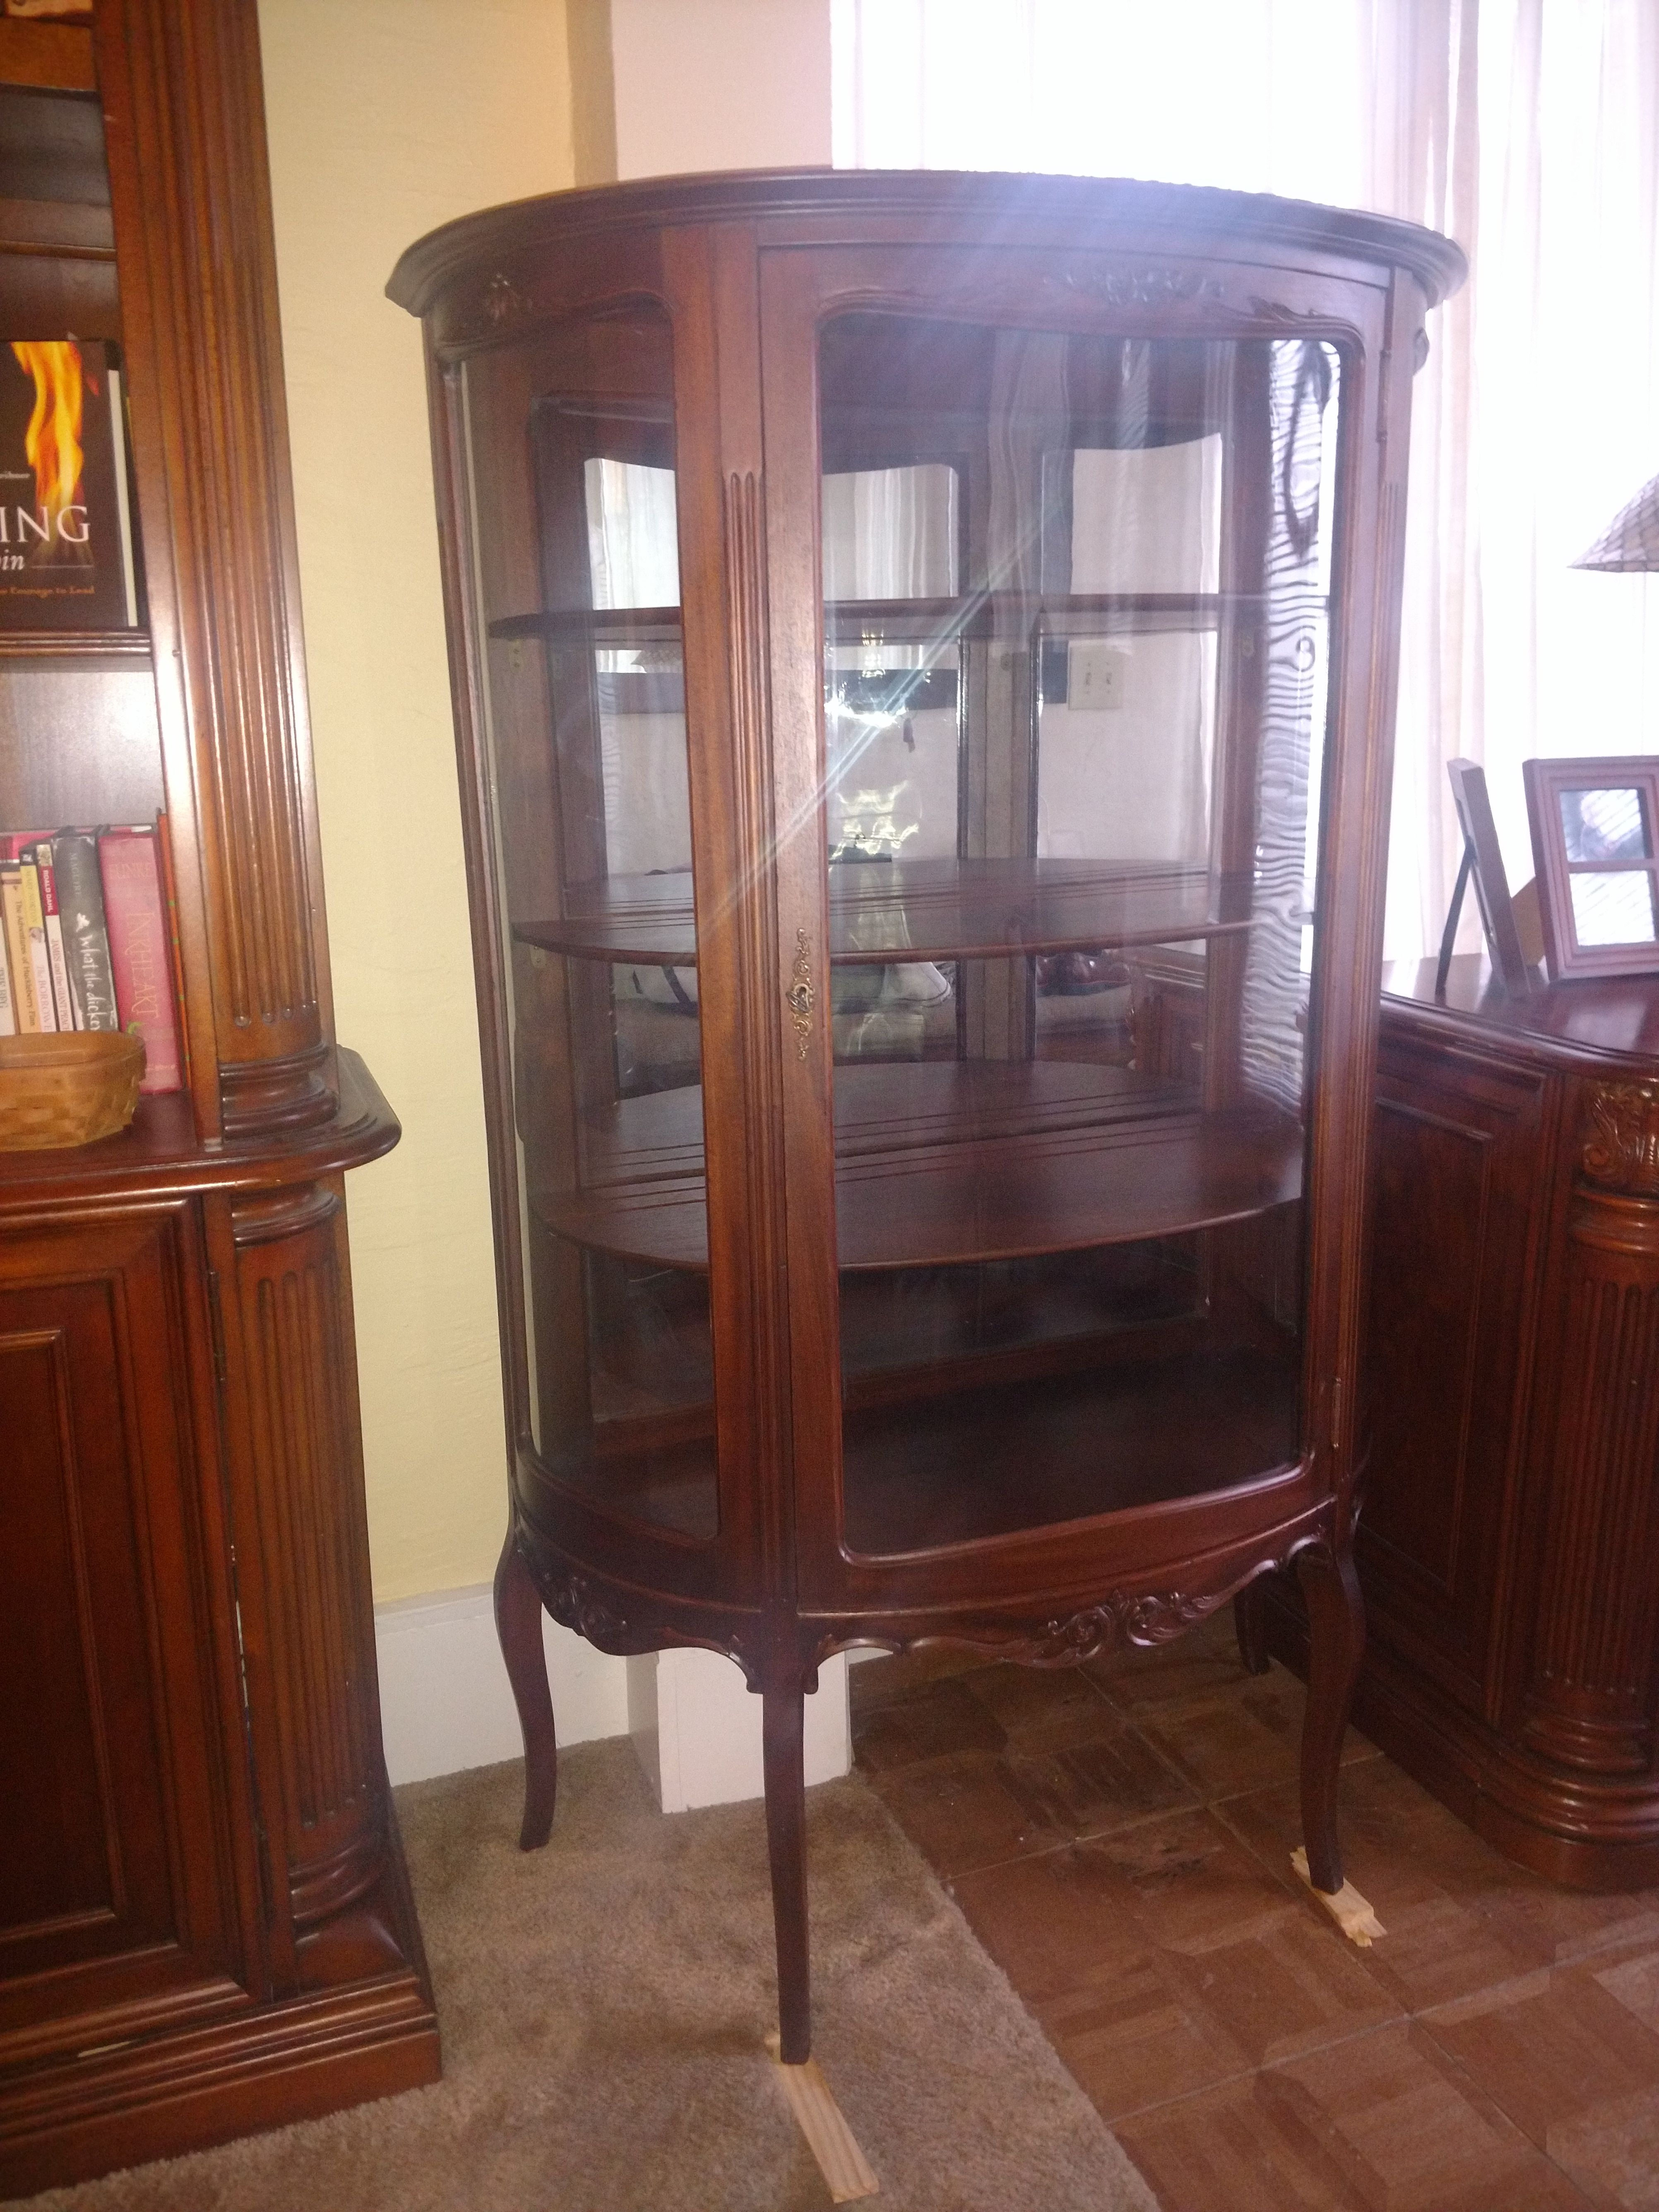 Excellent condition Antique Curio Cabinet with 3 shelves